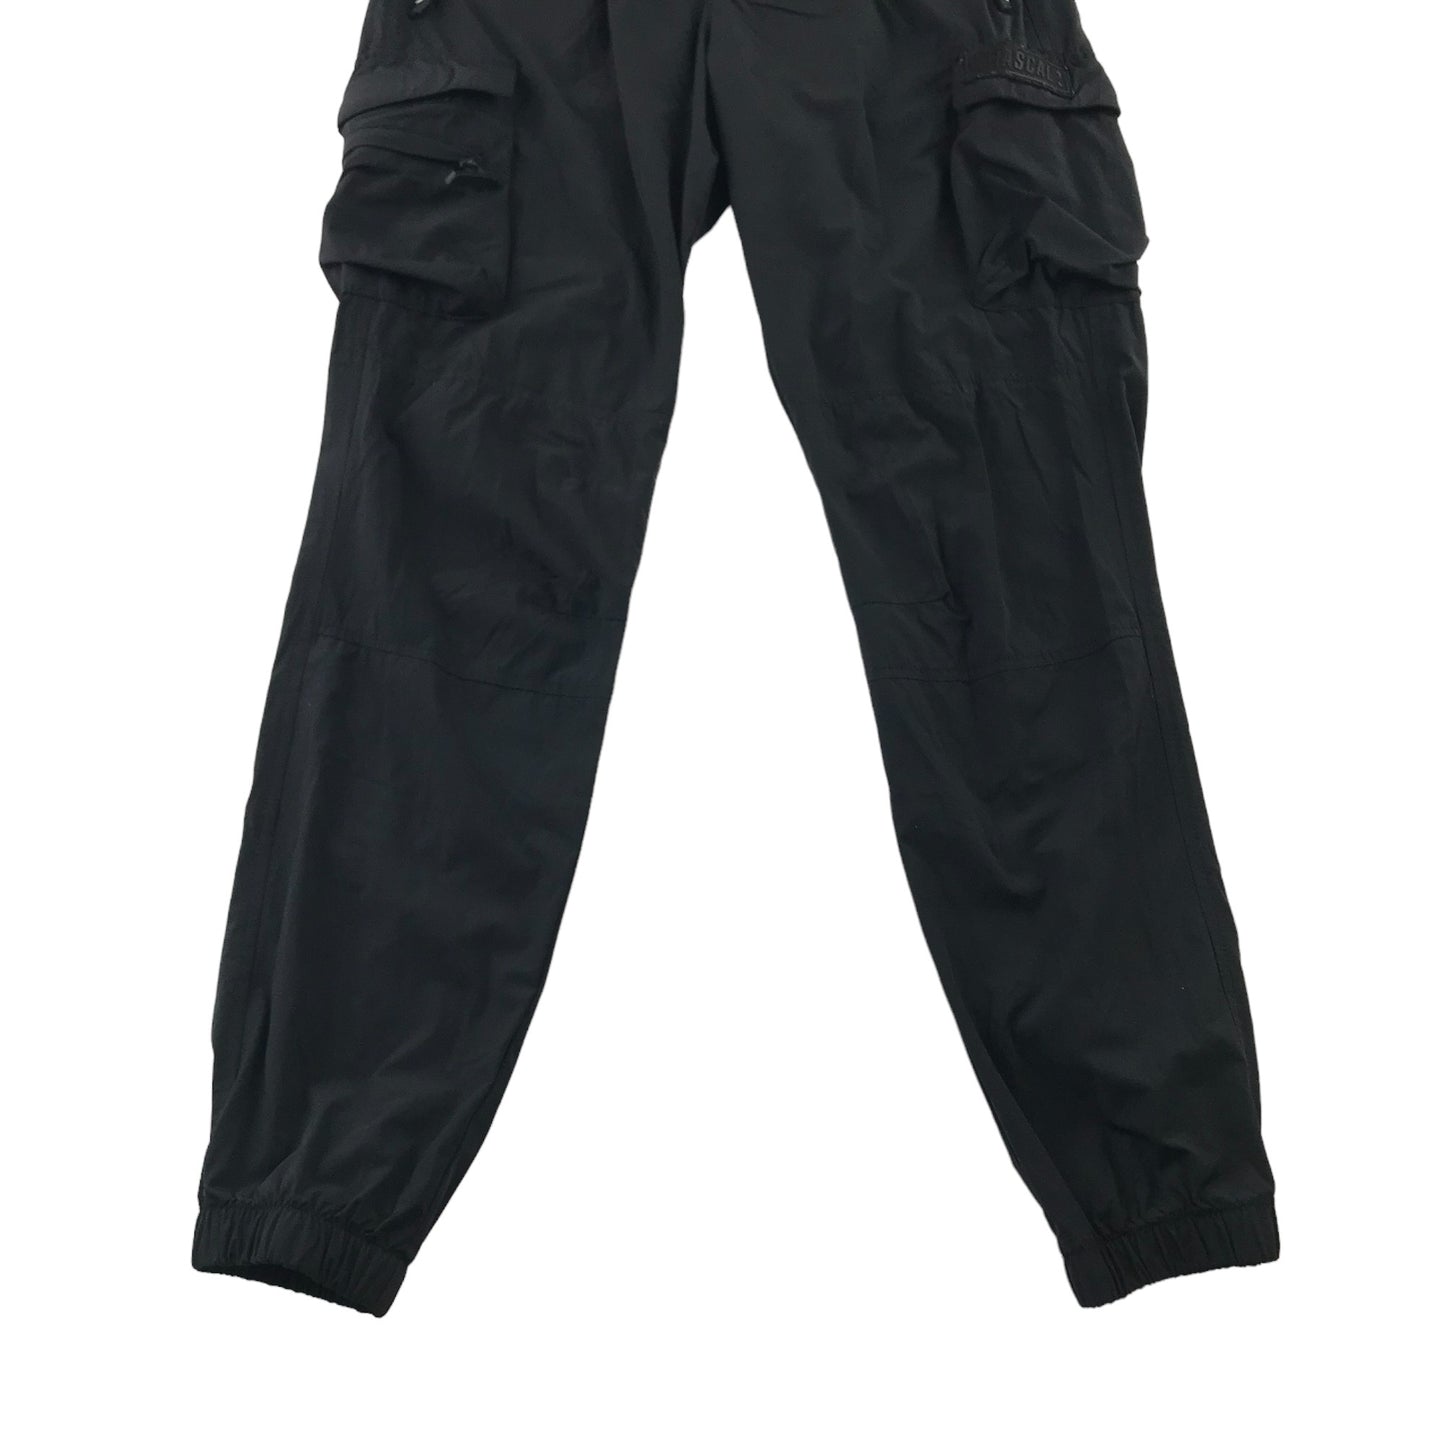 Rascal trousers 13-14 years black cargo style cuffed legs